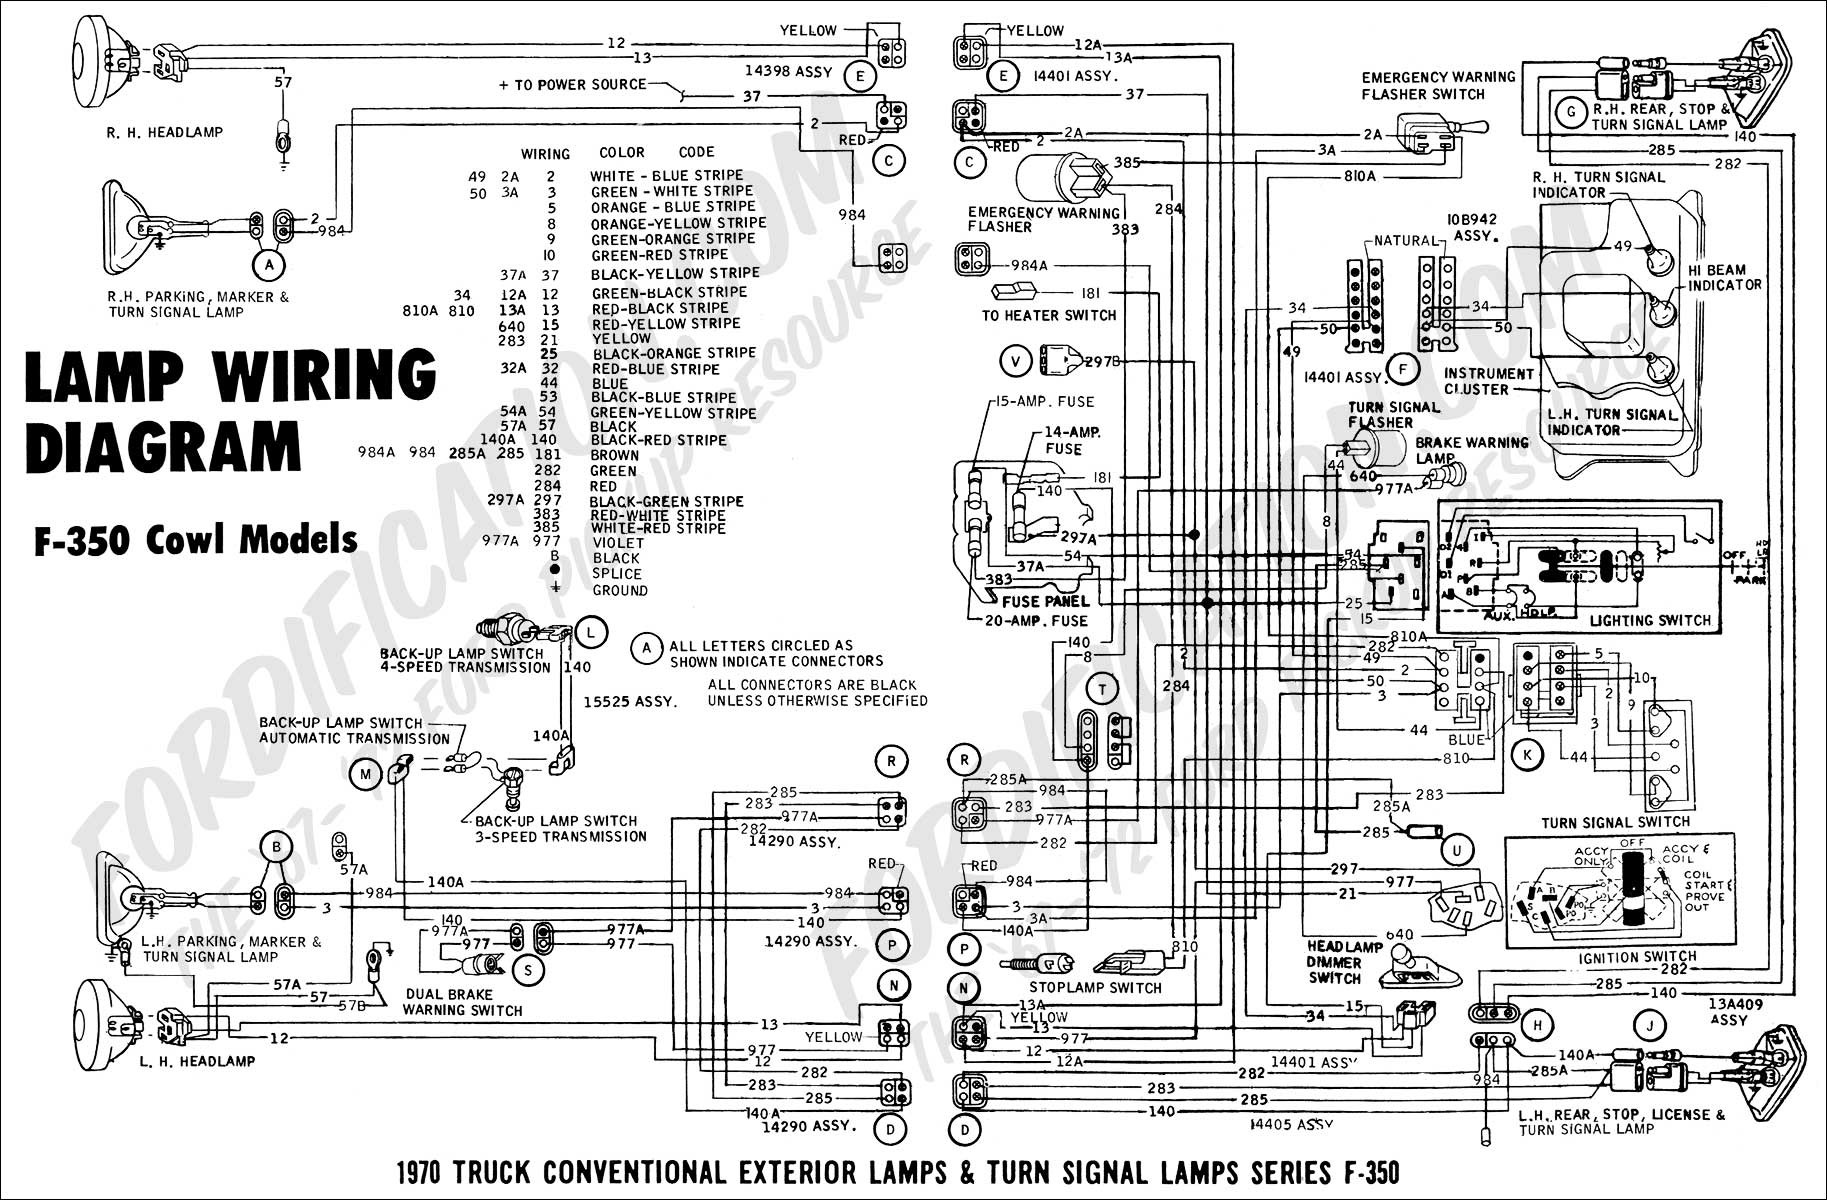 wiring diagram 70F350cowl lights01